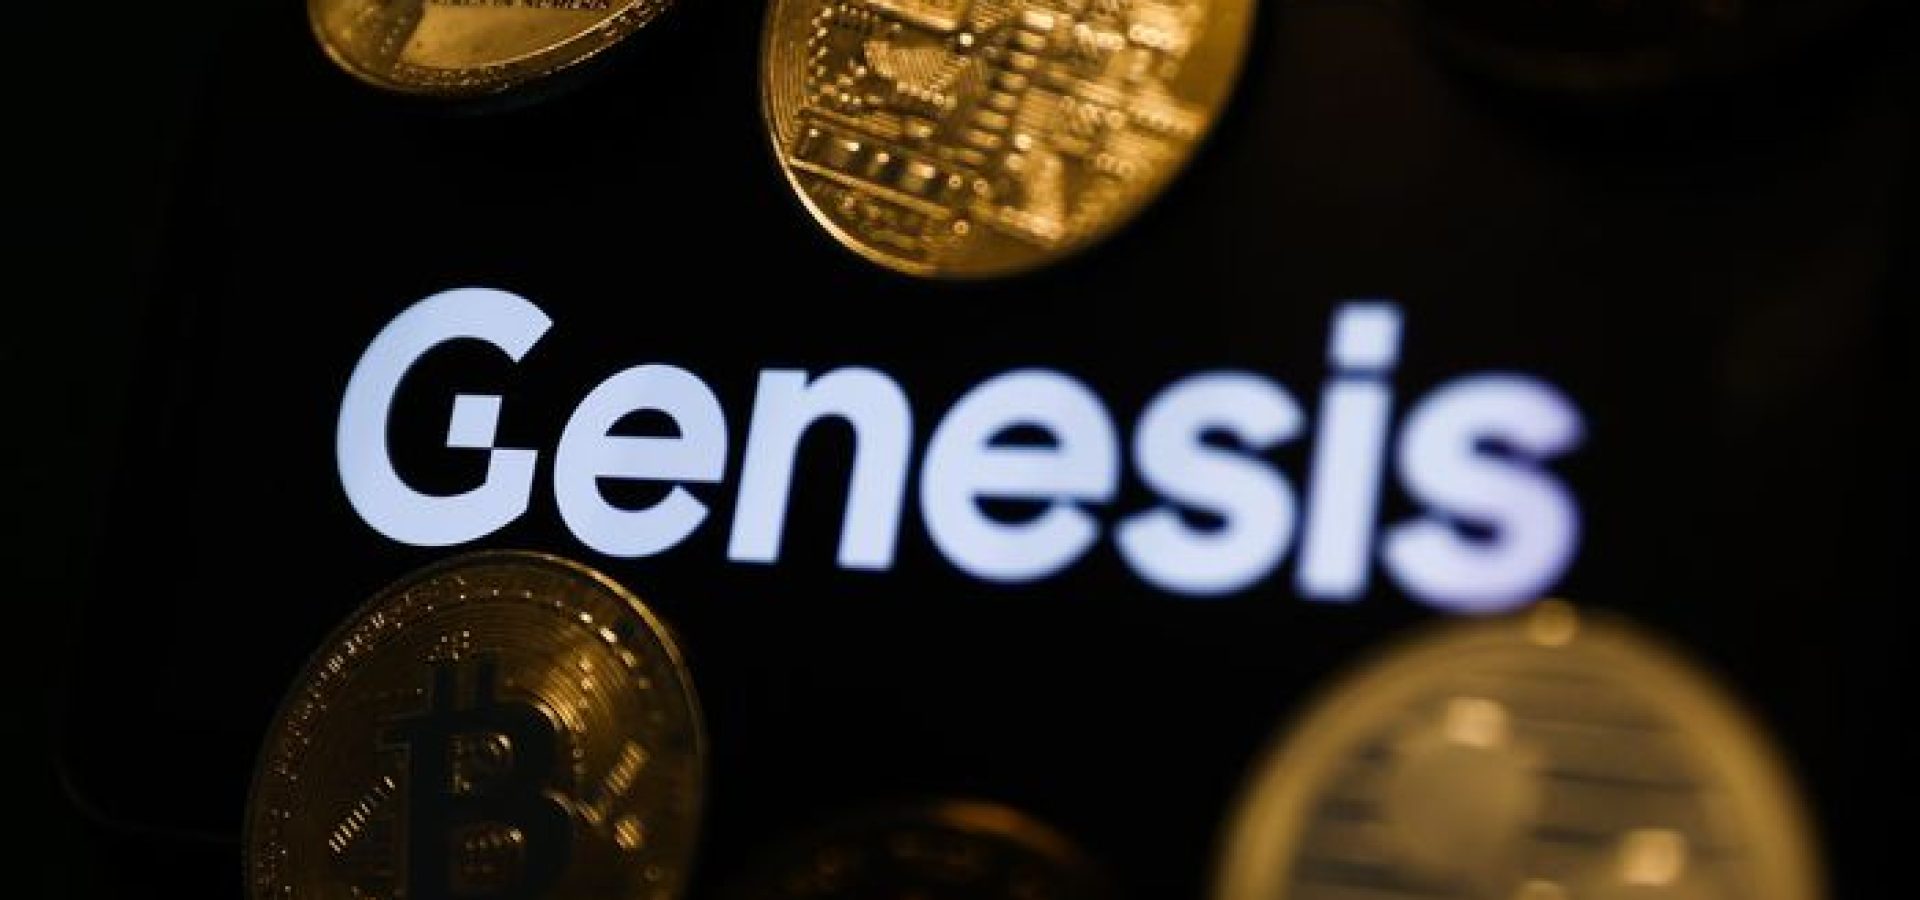 Genesis, Gemini